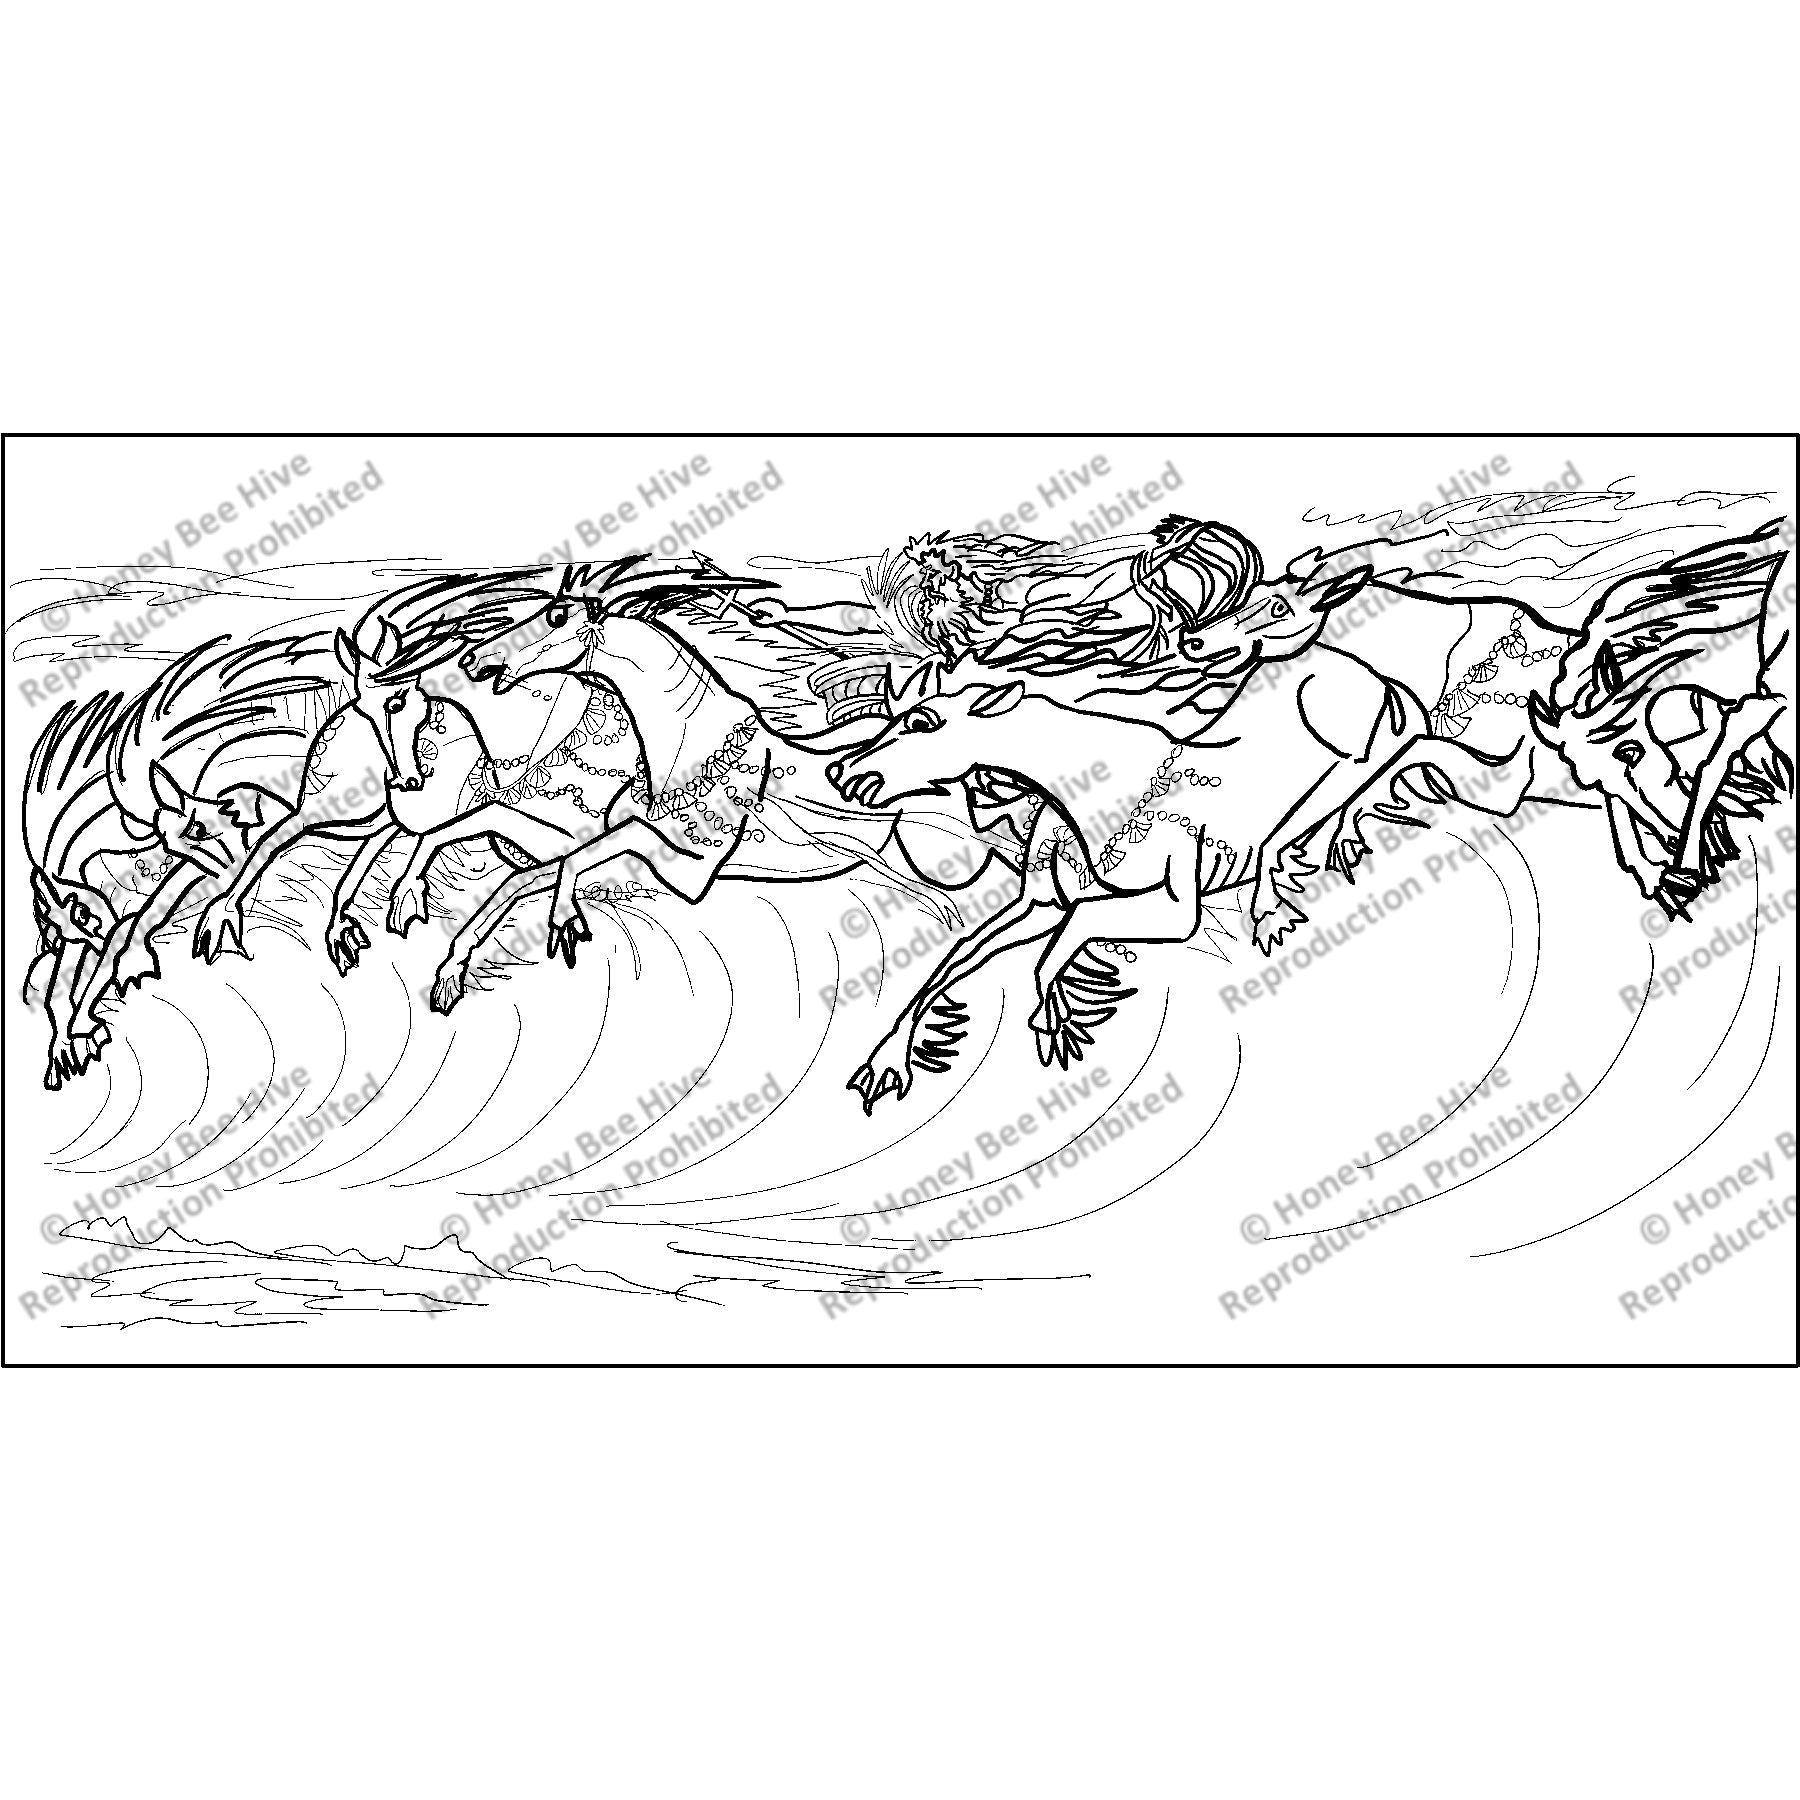 Neptune's Horses, ill. Walter Crane, 1910, rug hooking pattern